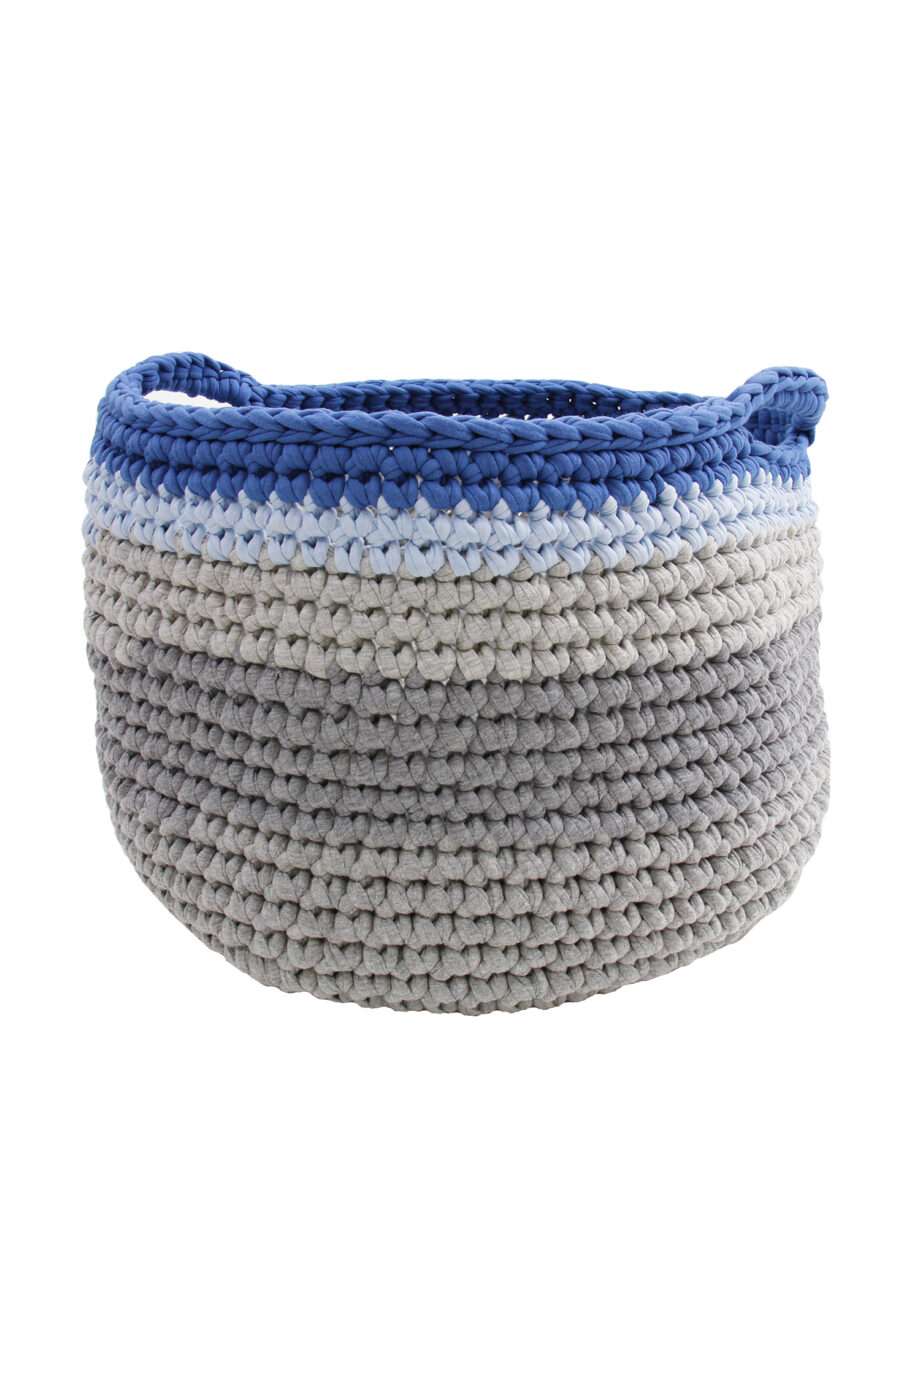 groovy jeans blue crochet cotton basket medium